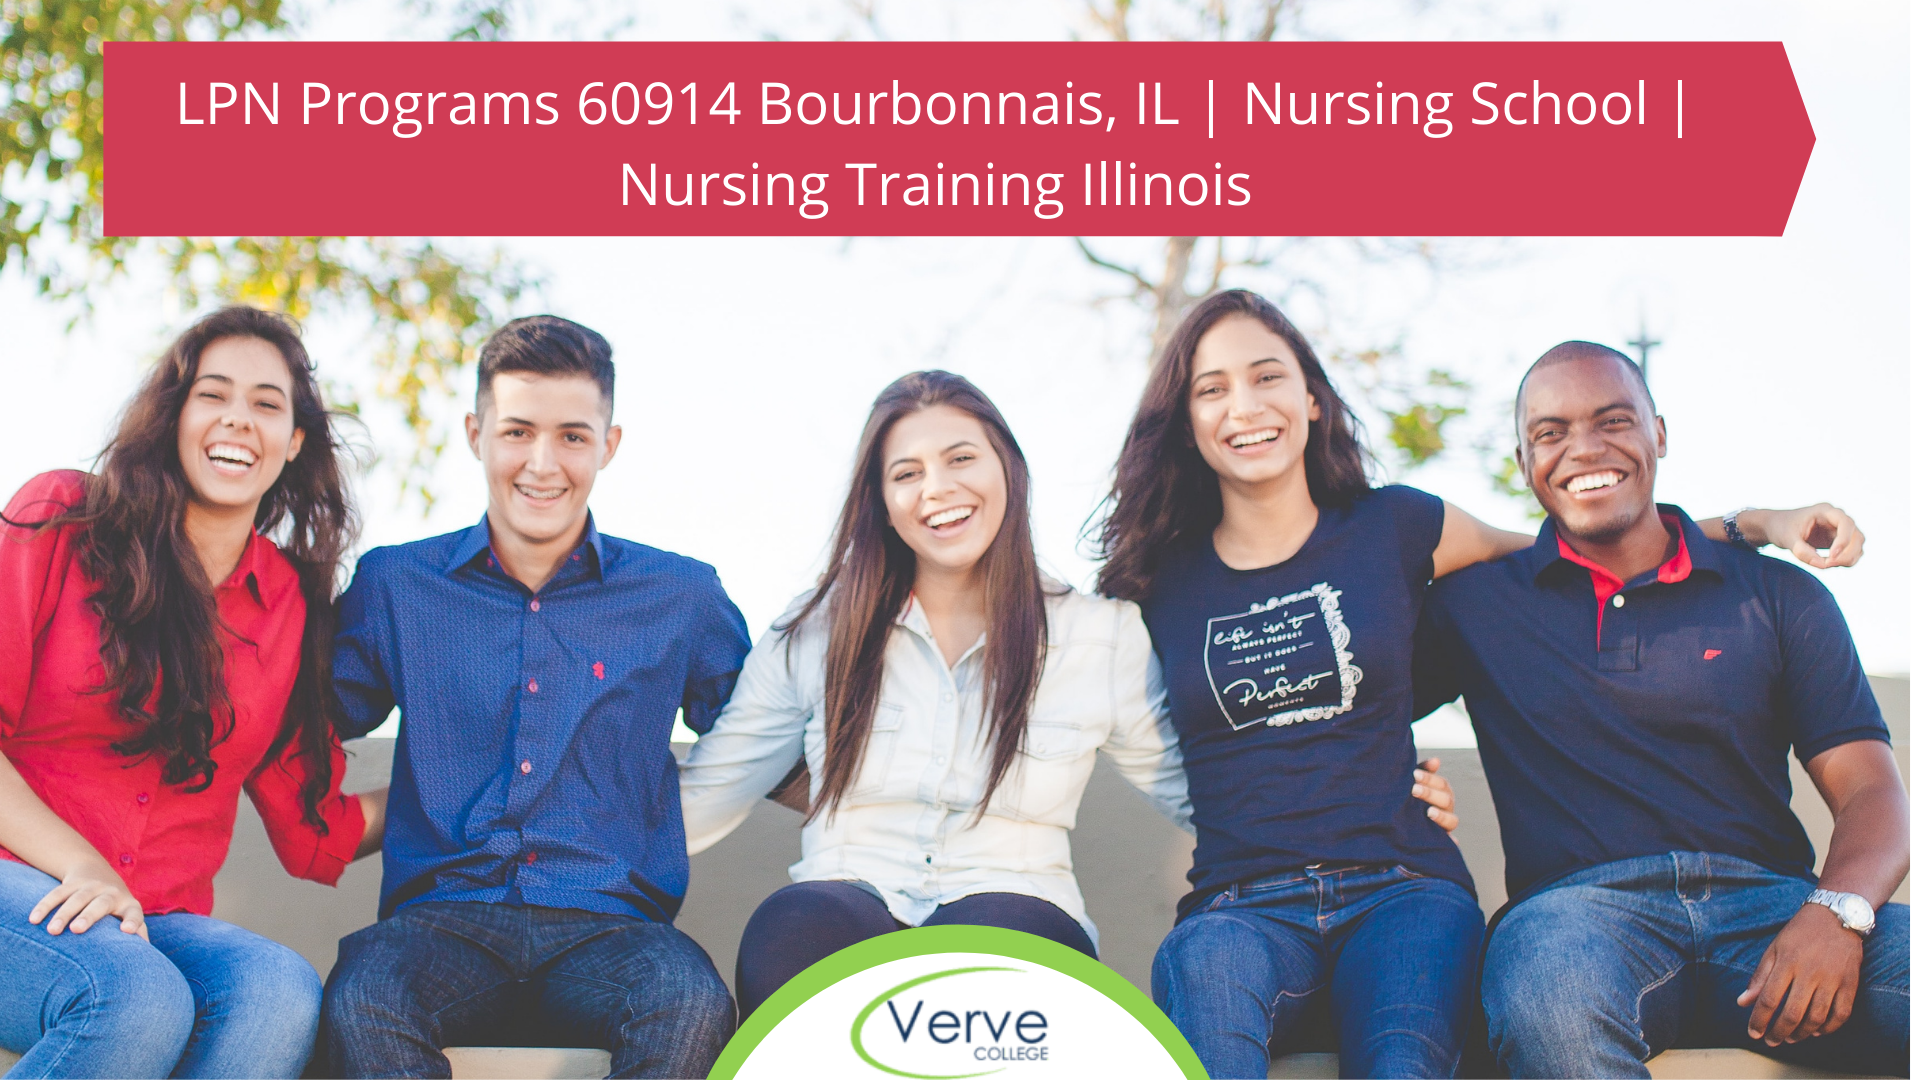 LPN Programs 60914 Bourbonnais, IL | Nursing School | Nursing Training Illinois